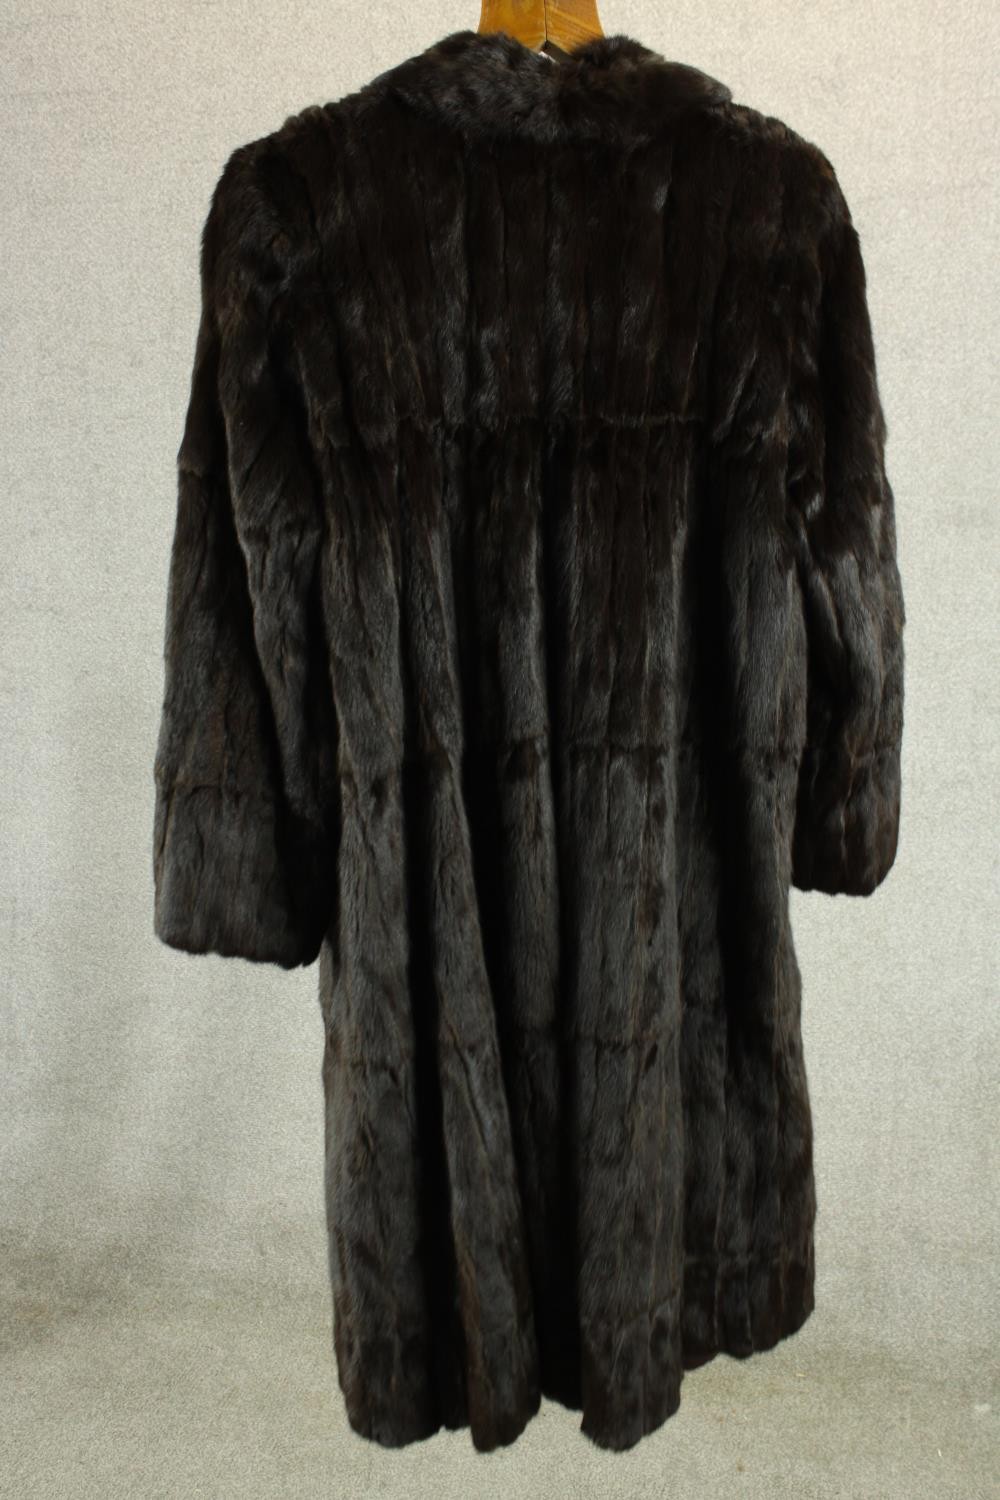 A ladies black fur full length coat. L.80cm. - Image 2 of 2